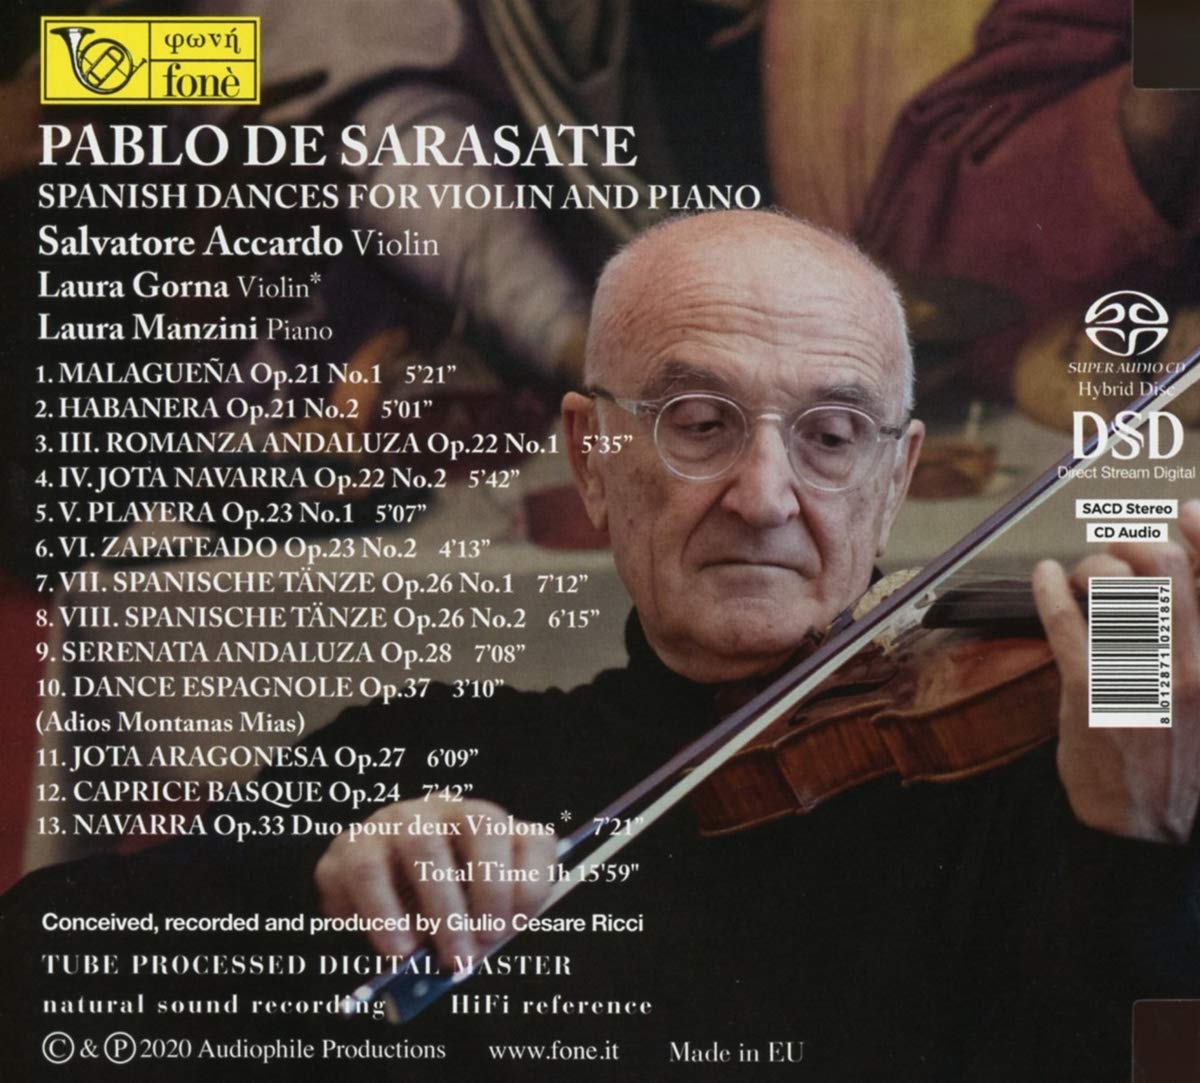 Salvatore Accardo 사라사테: 바이올린과 피아노를 위한 스페인 춤 모음곡 (Sarasate: Spanish Dances for Violin and Piano) 